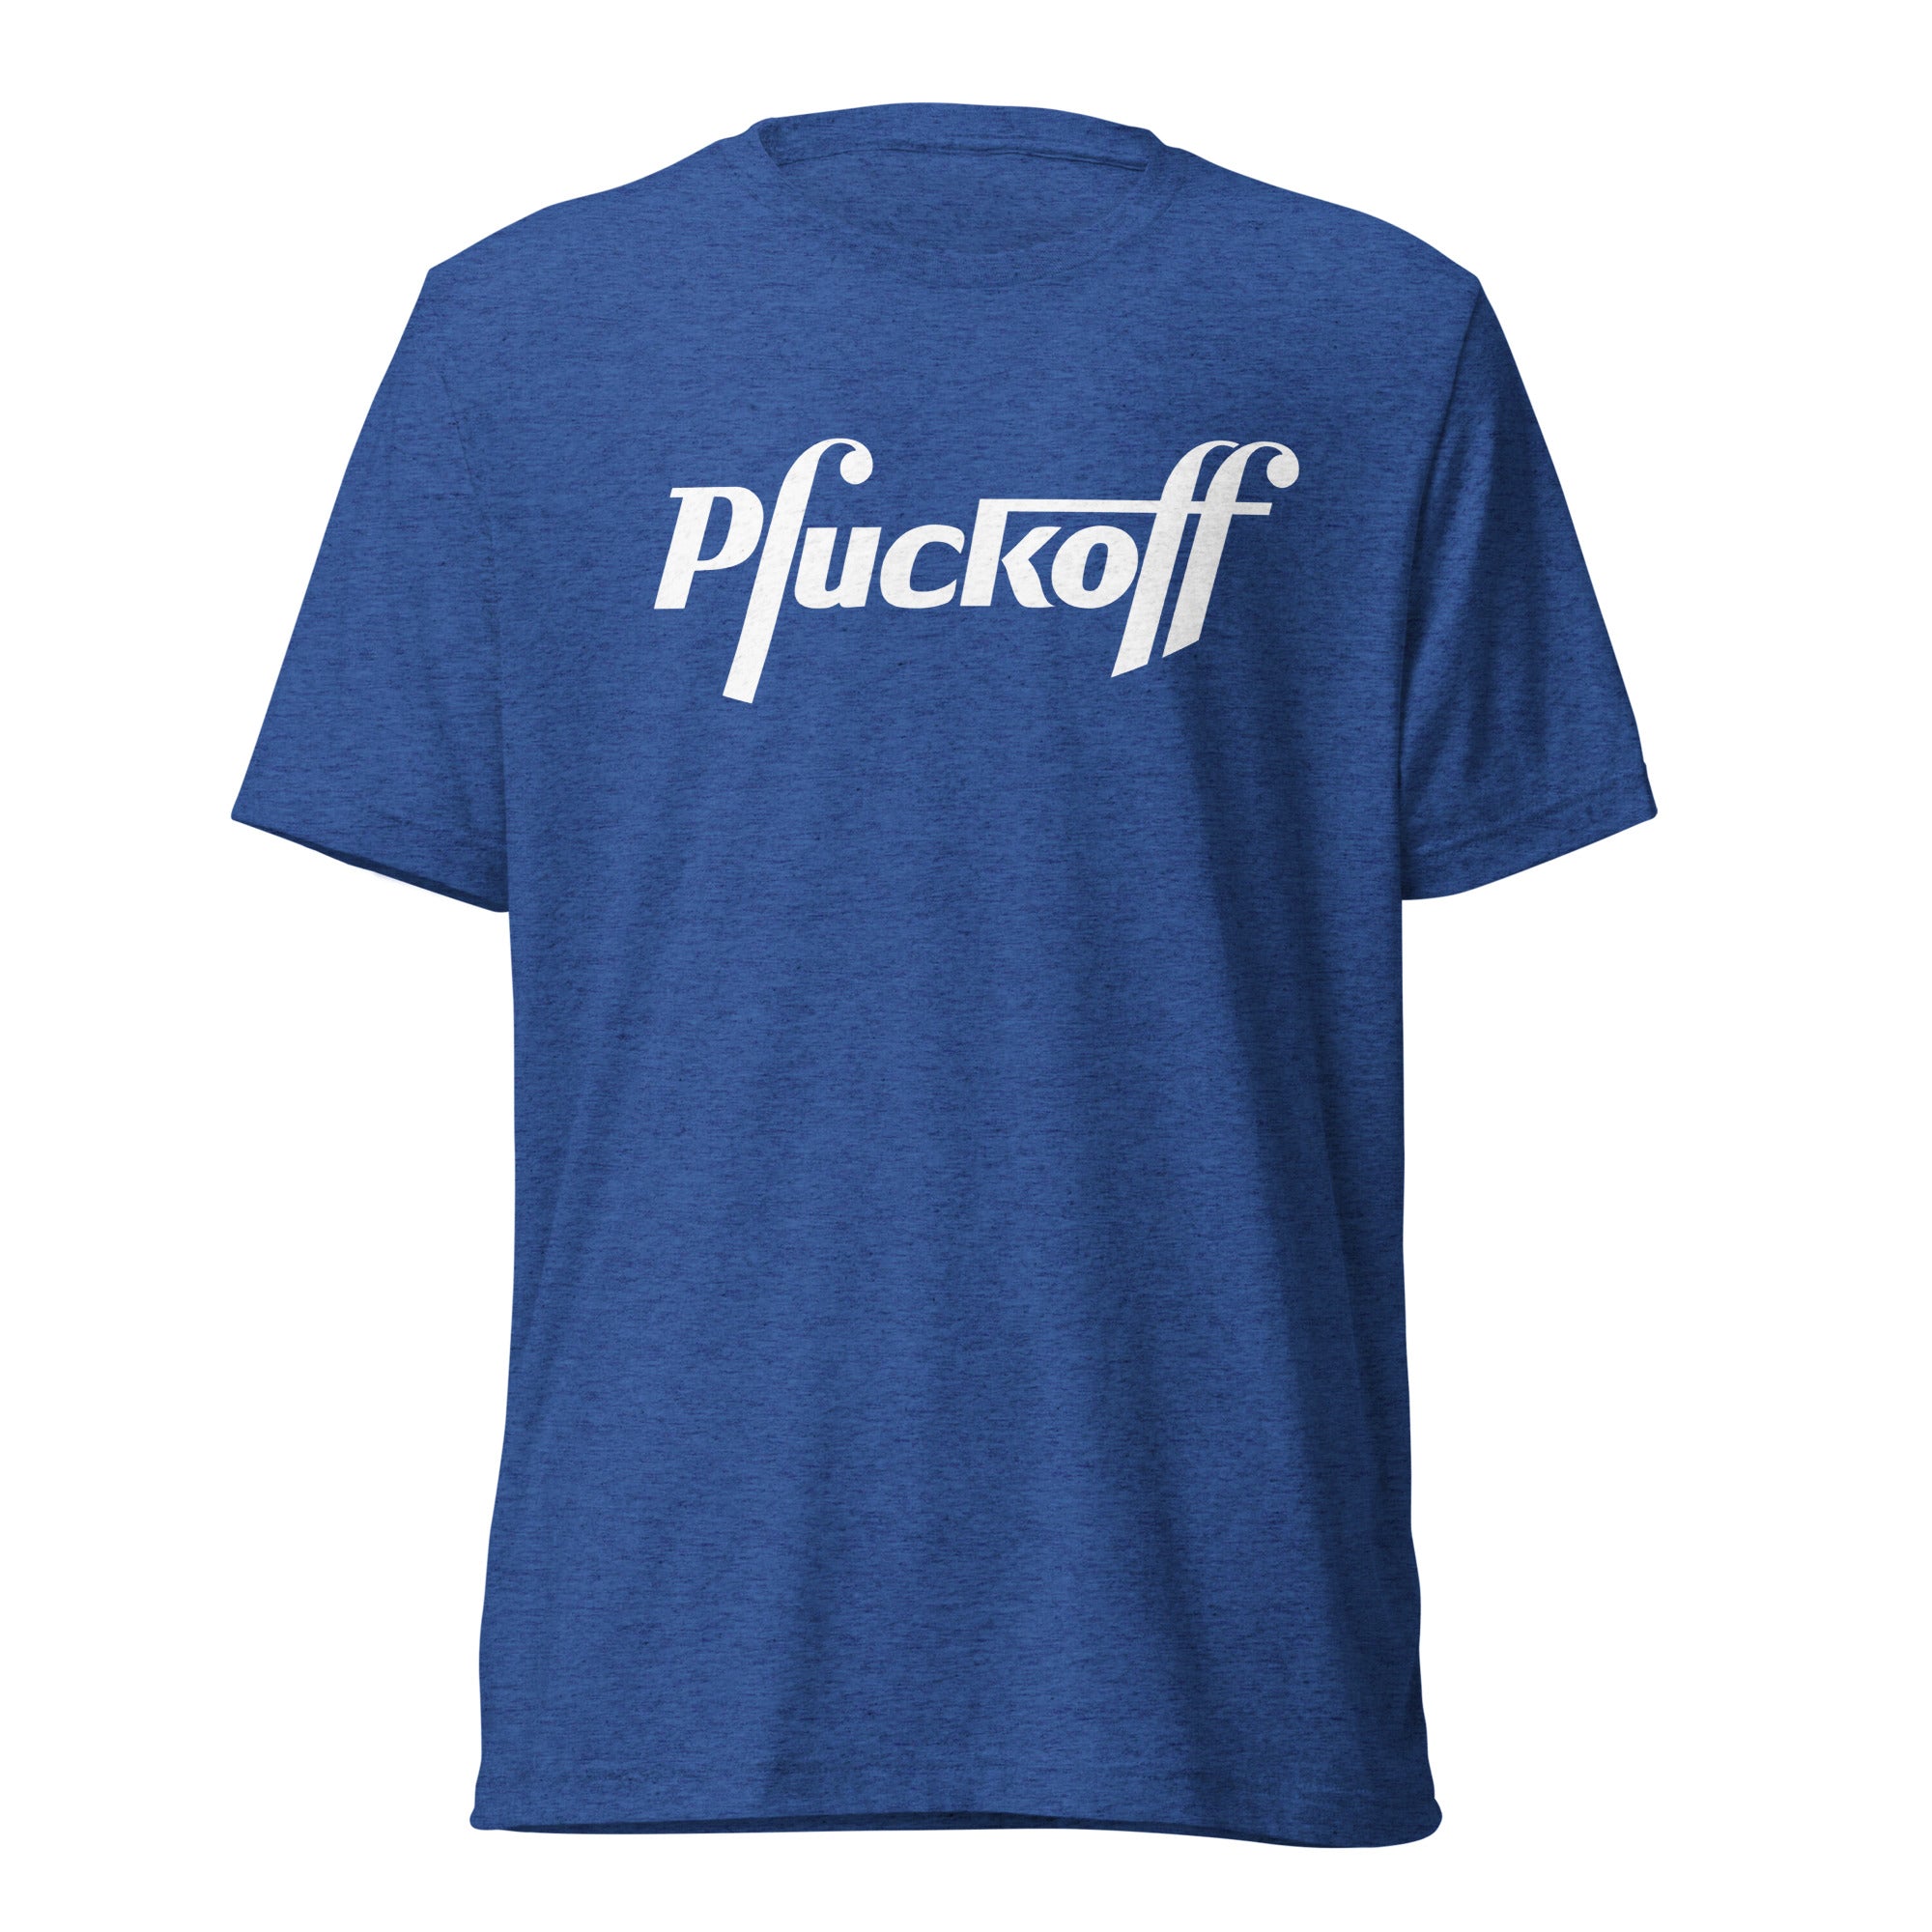 Pfuckoff Tri-blend Shirt